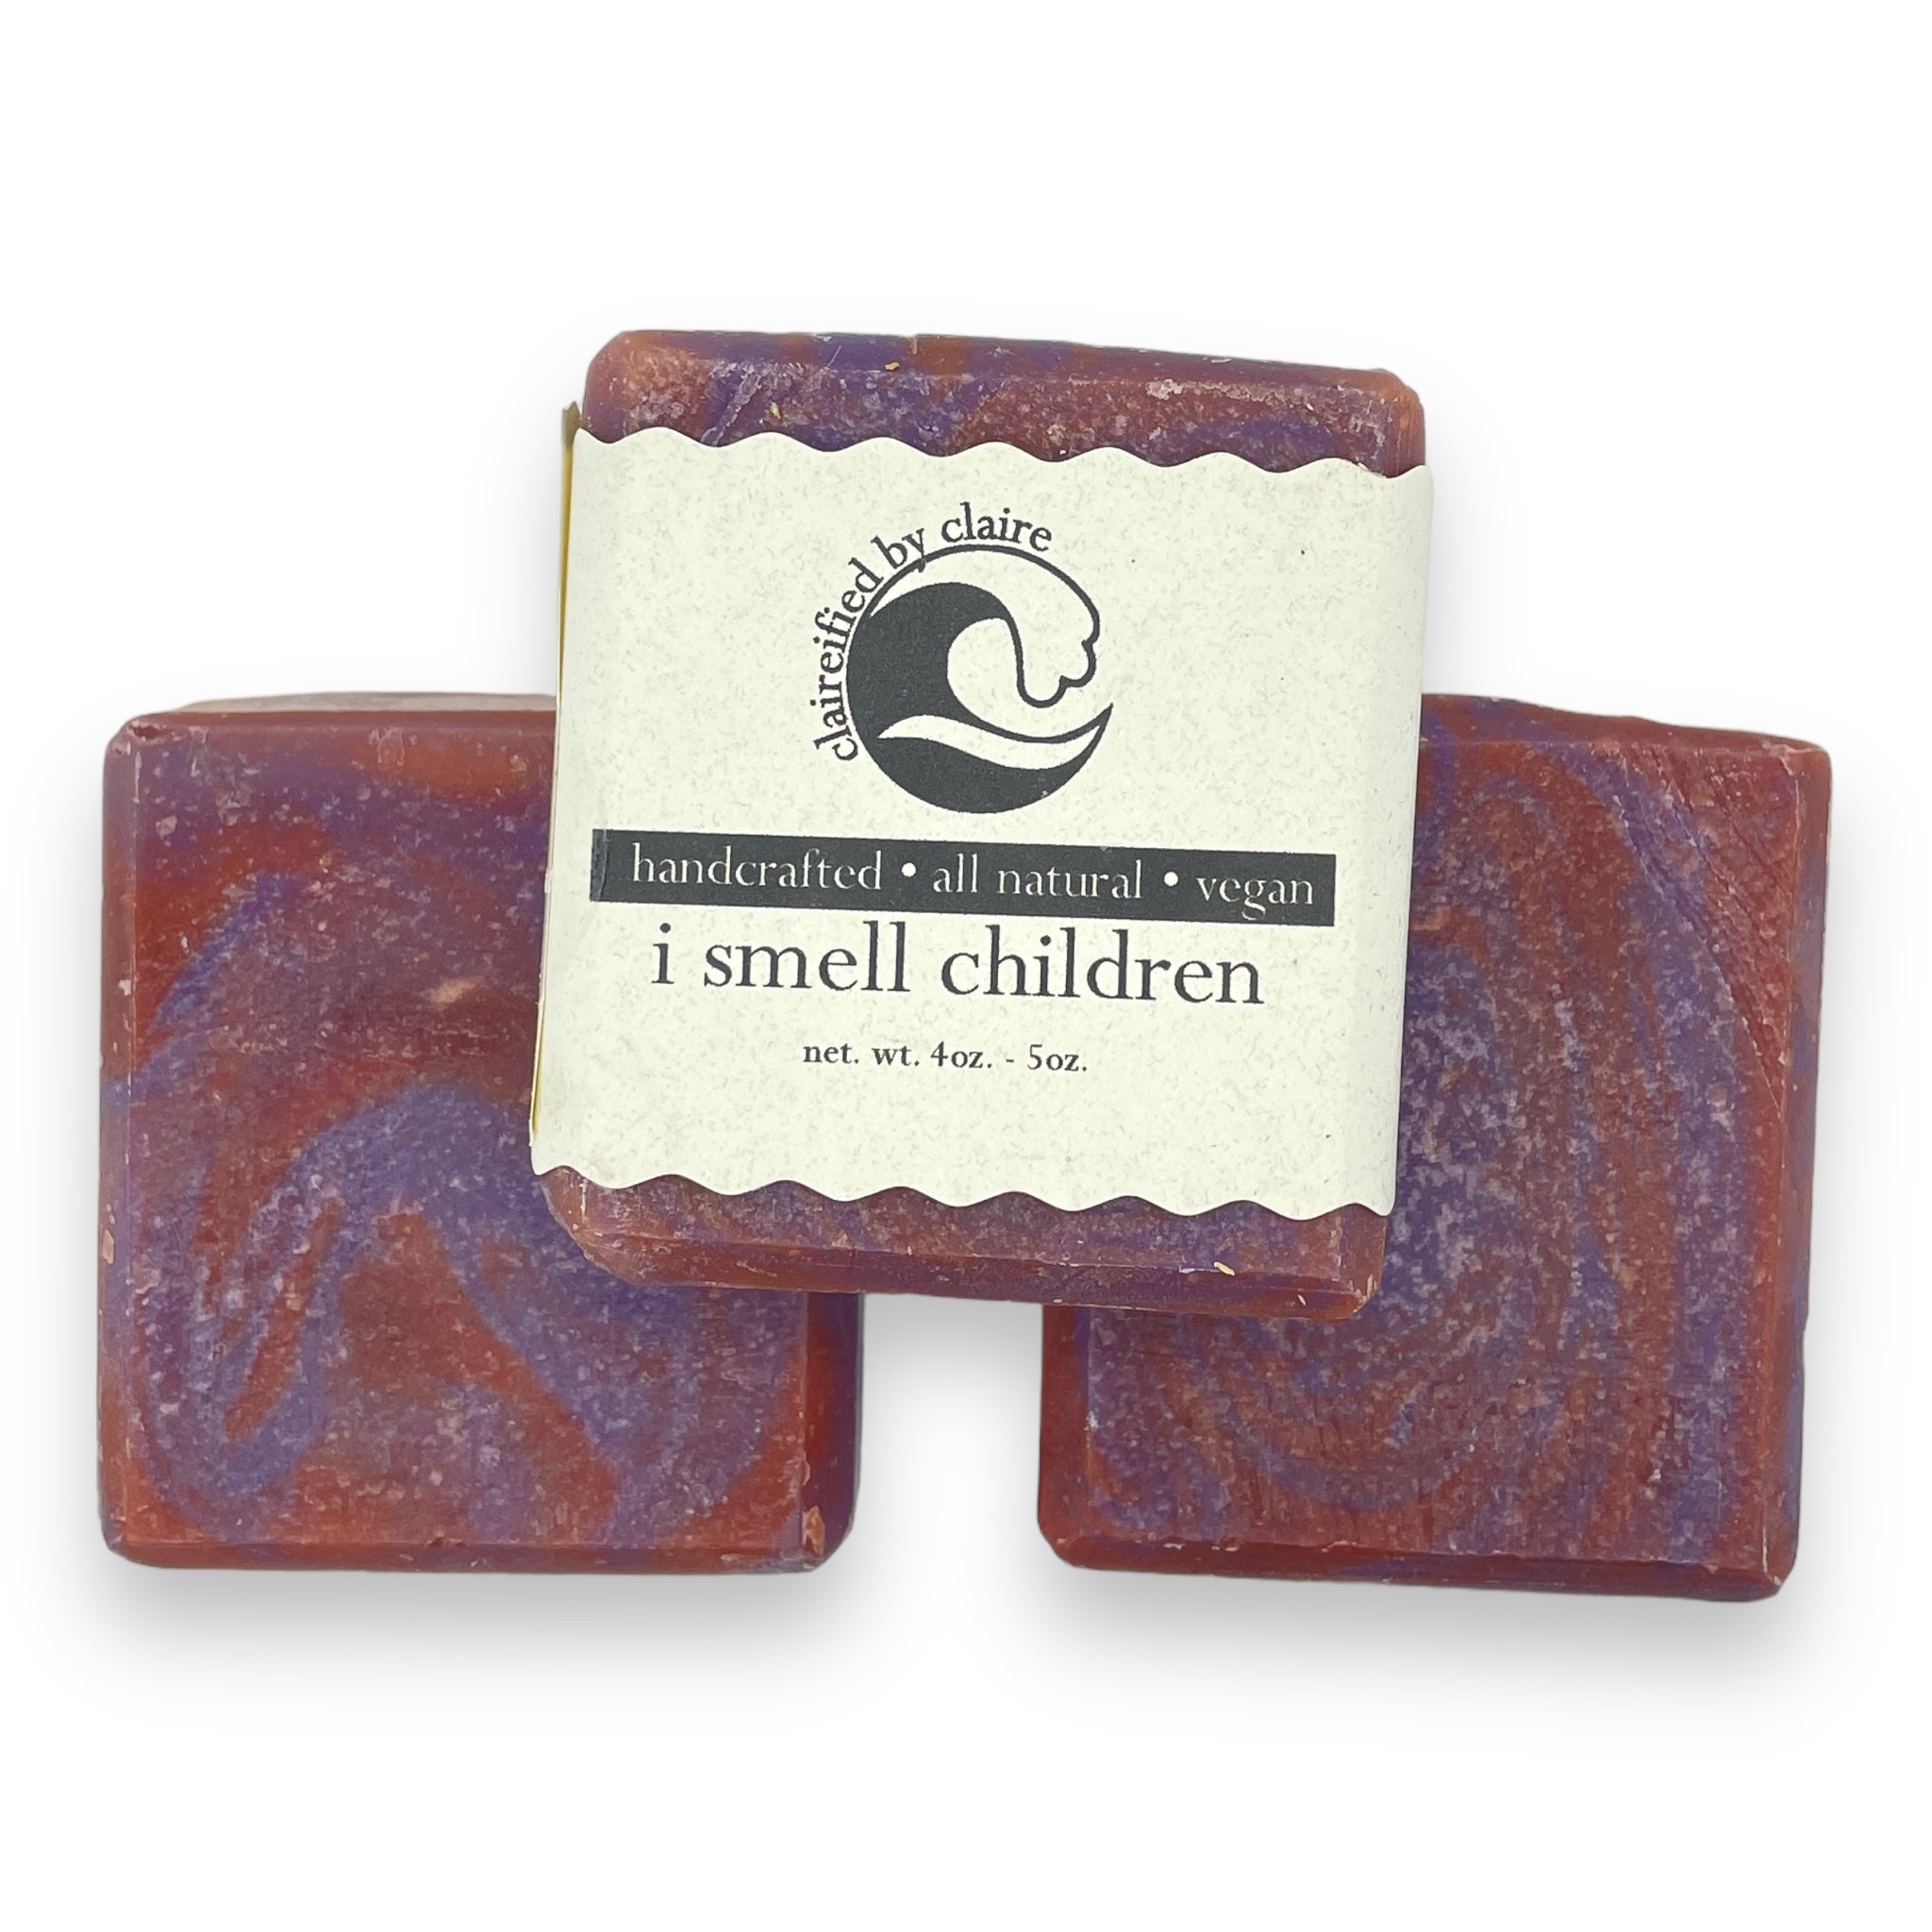 I Smell Children handmade soap inspired by Mary Sanderson